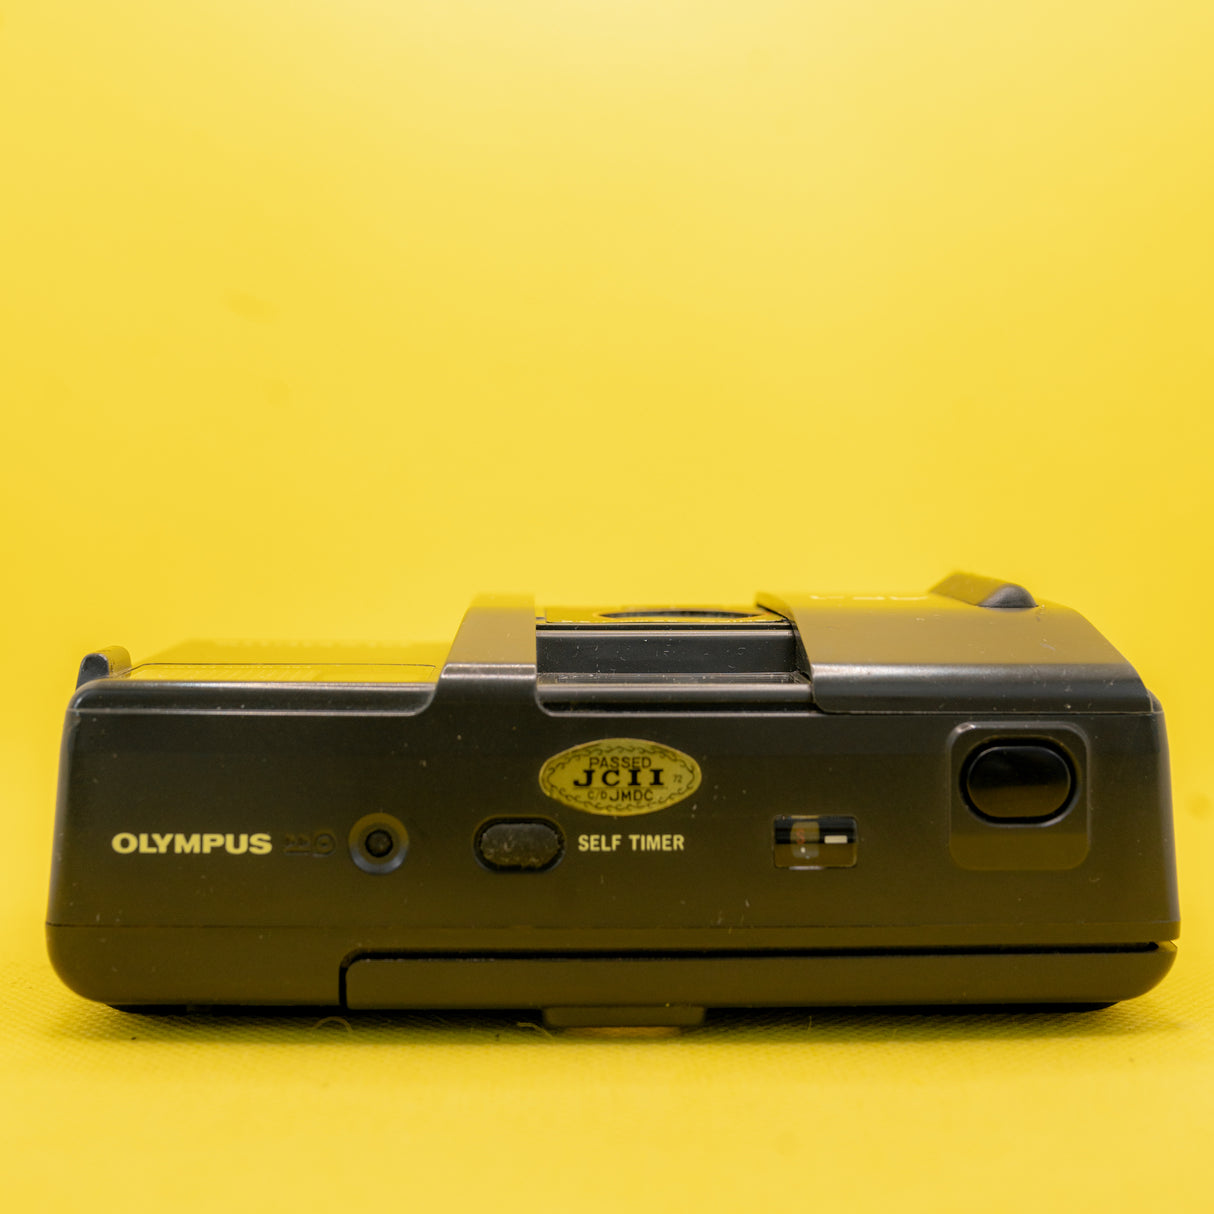 Olympus AF-1 - Fotocamera a pellicola premium 35 mm (Zuiko 2.8)